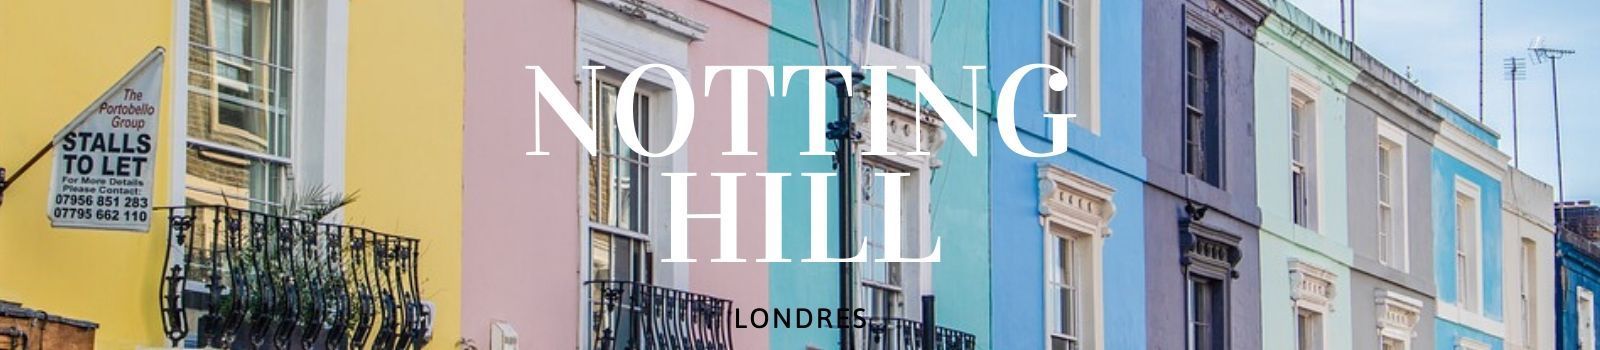 Notting Hill Londres